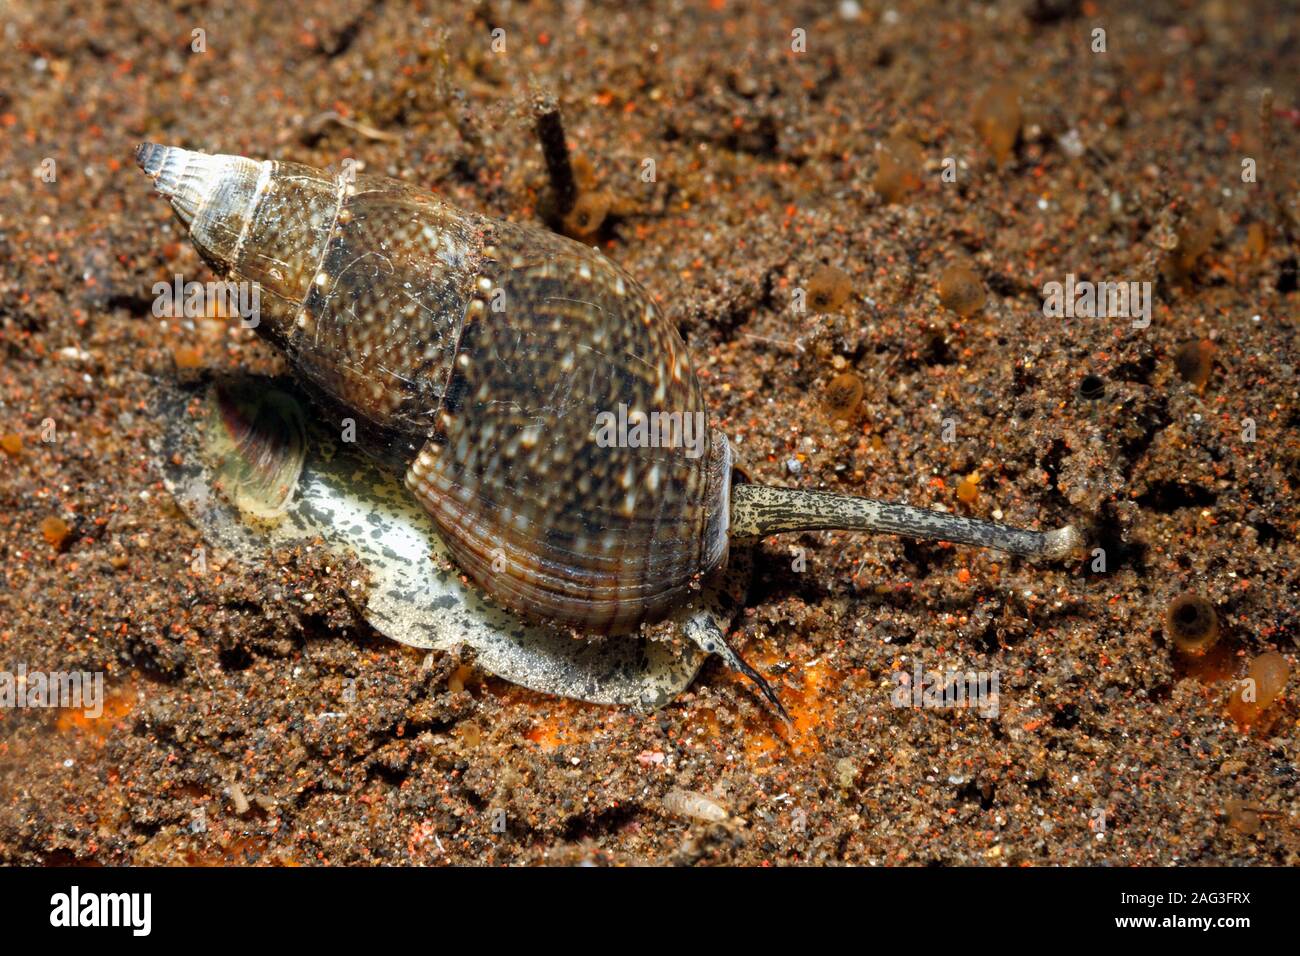 Sea Snail, Nassarius reeveanus, crawling along sand showing syphon and eye. Often called . Tulamben, Bali, Indonesia. Bali Sea, Indian Ocean Stock Photo